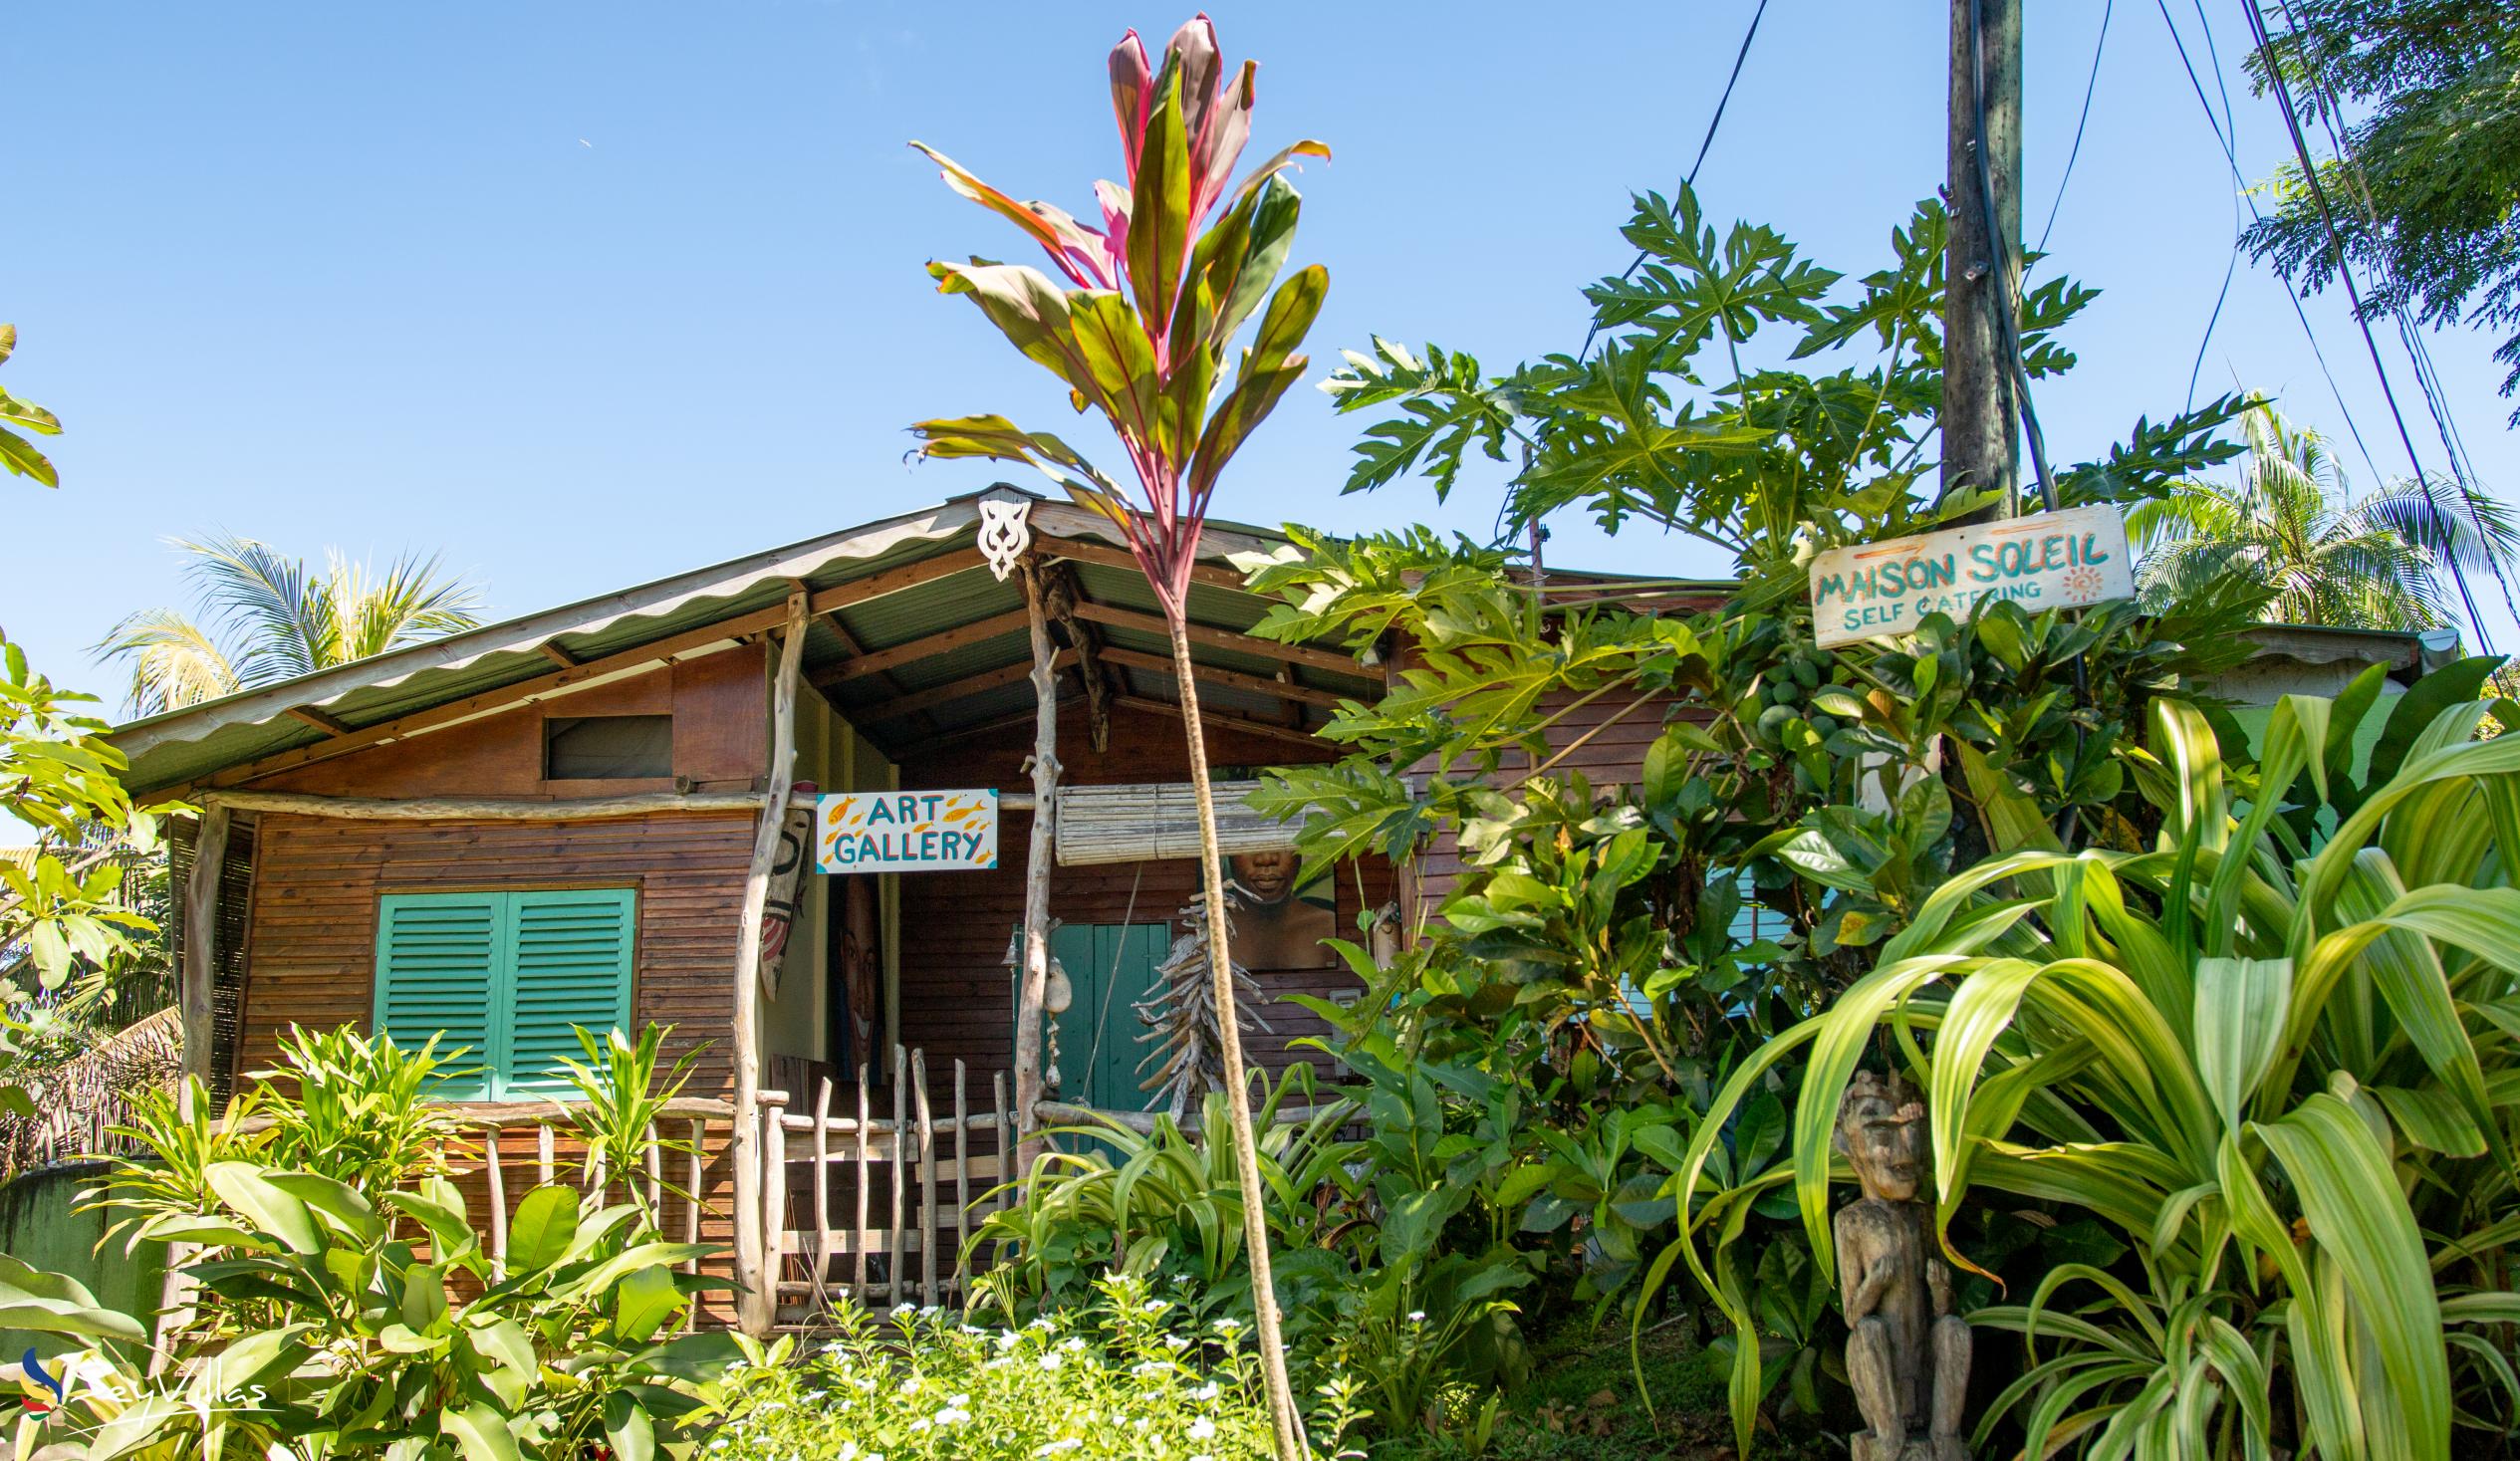 Foto 11: Maison Soleil - Aussenbereich - Mahé (Seychellen)